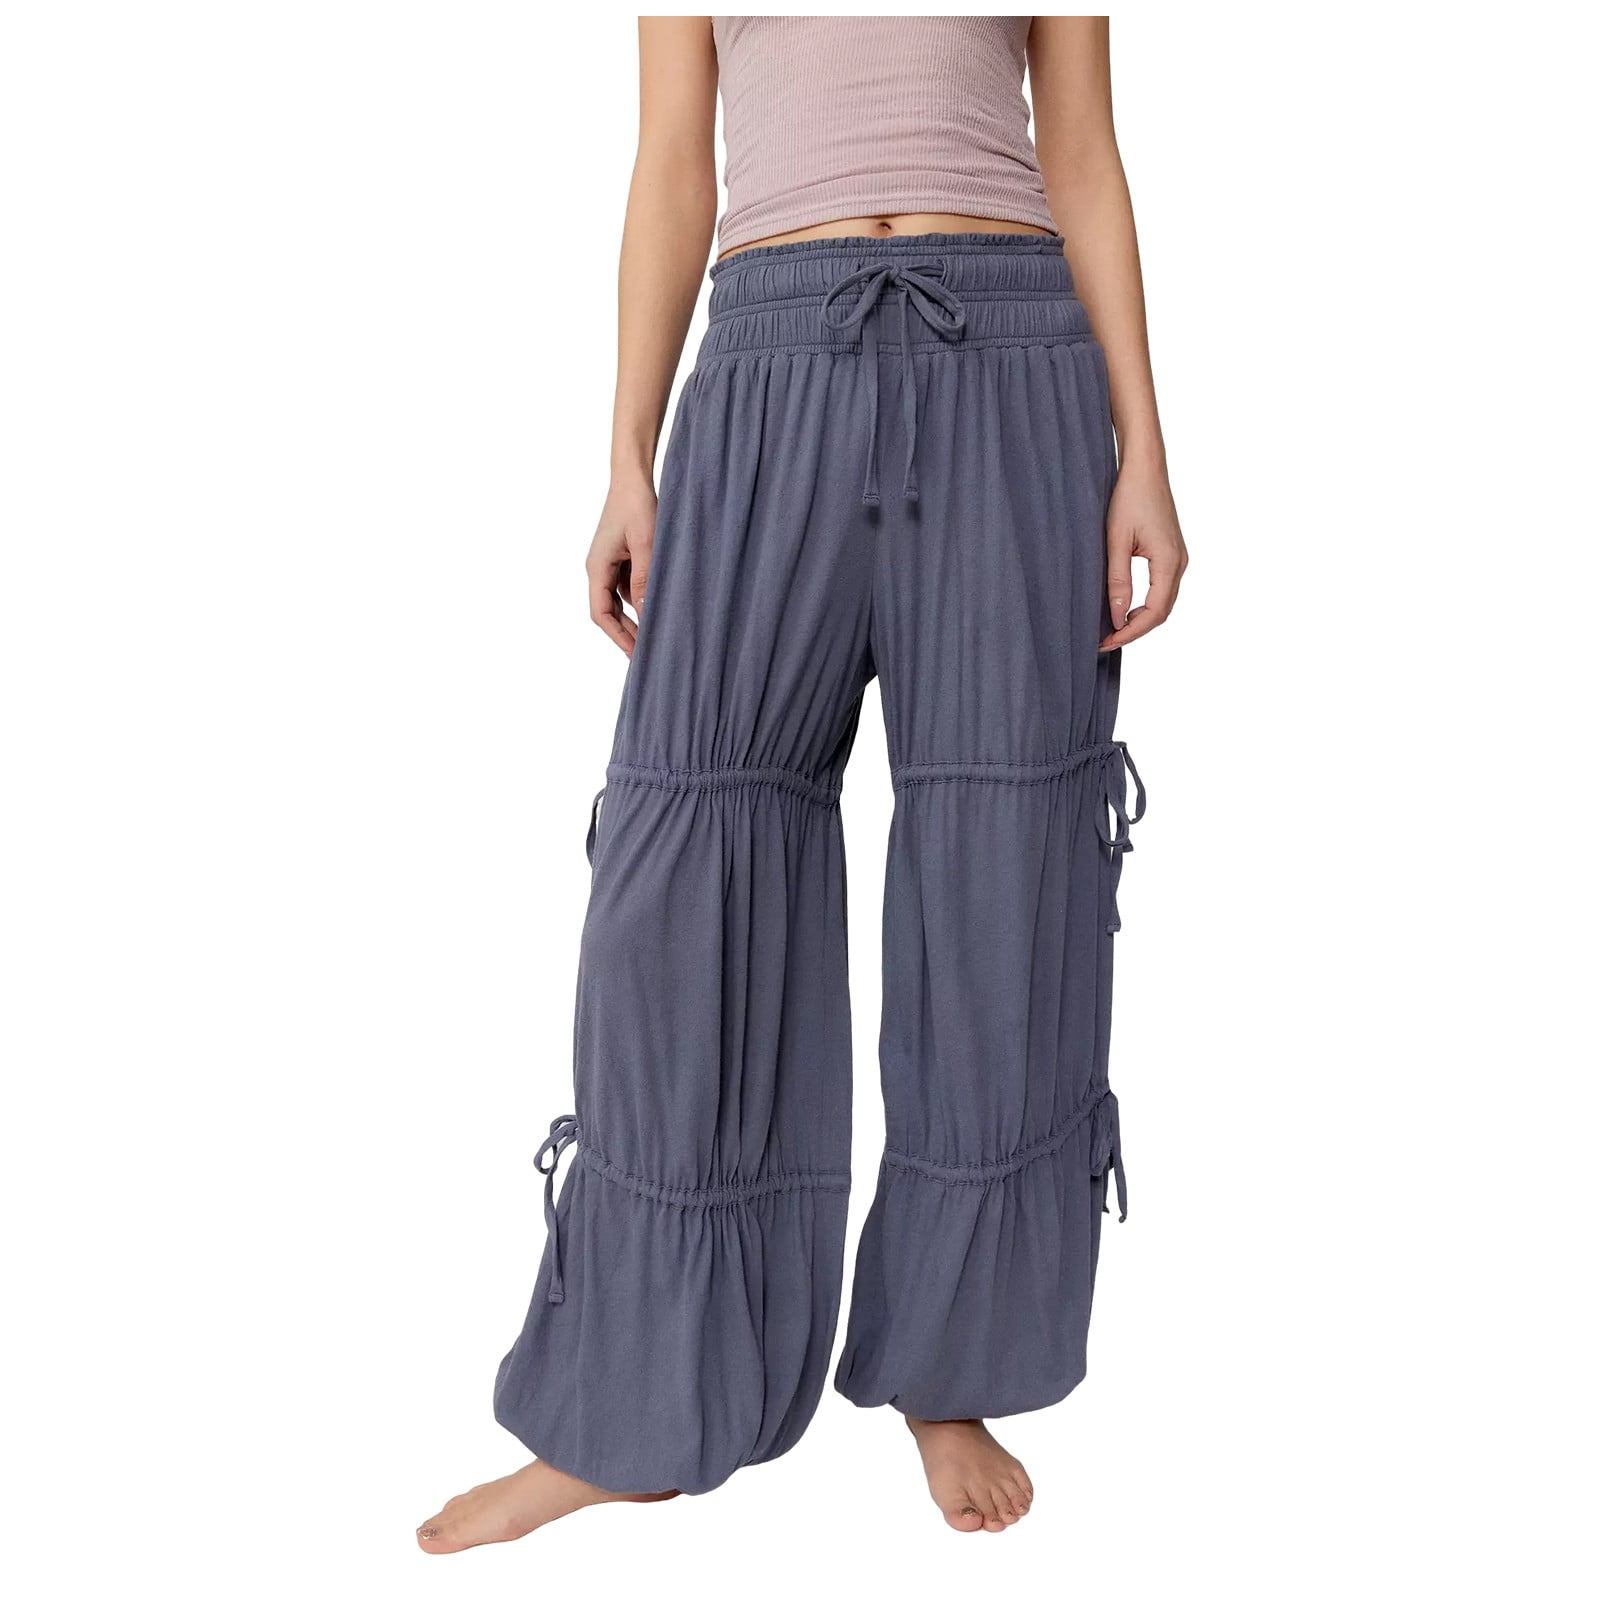 Deagia Women's High-Waisted Sweatpants Full Length Pants Casual